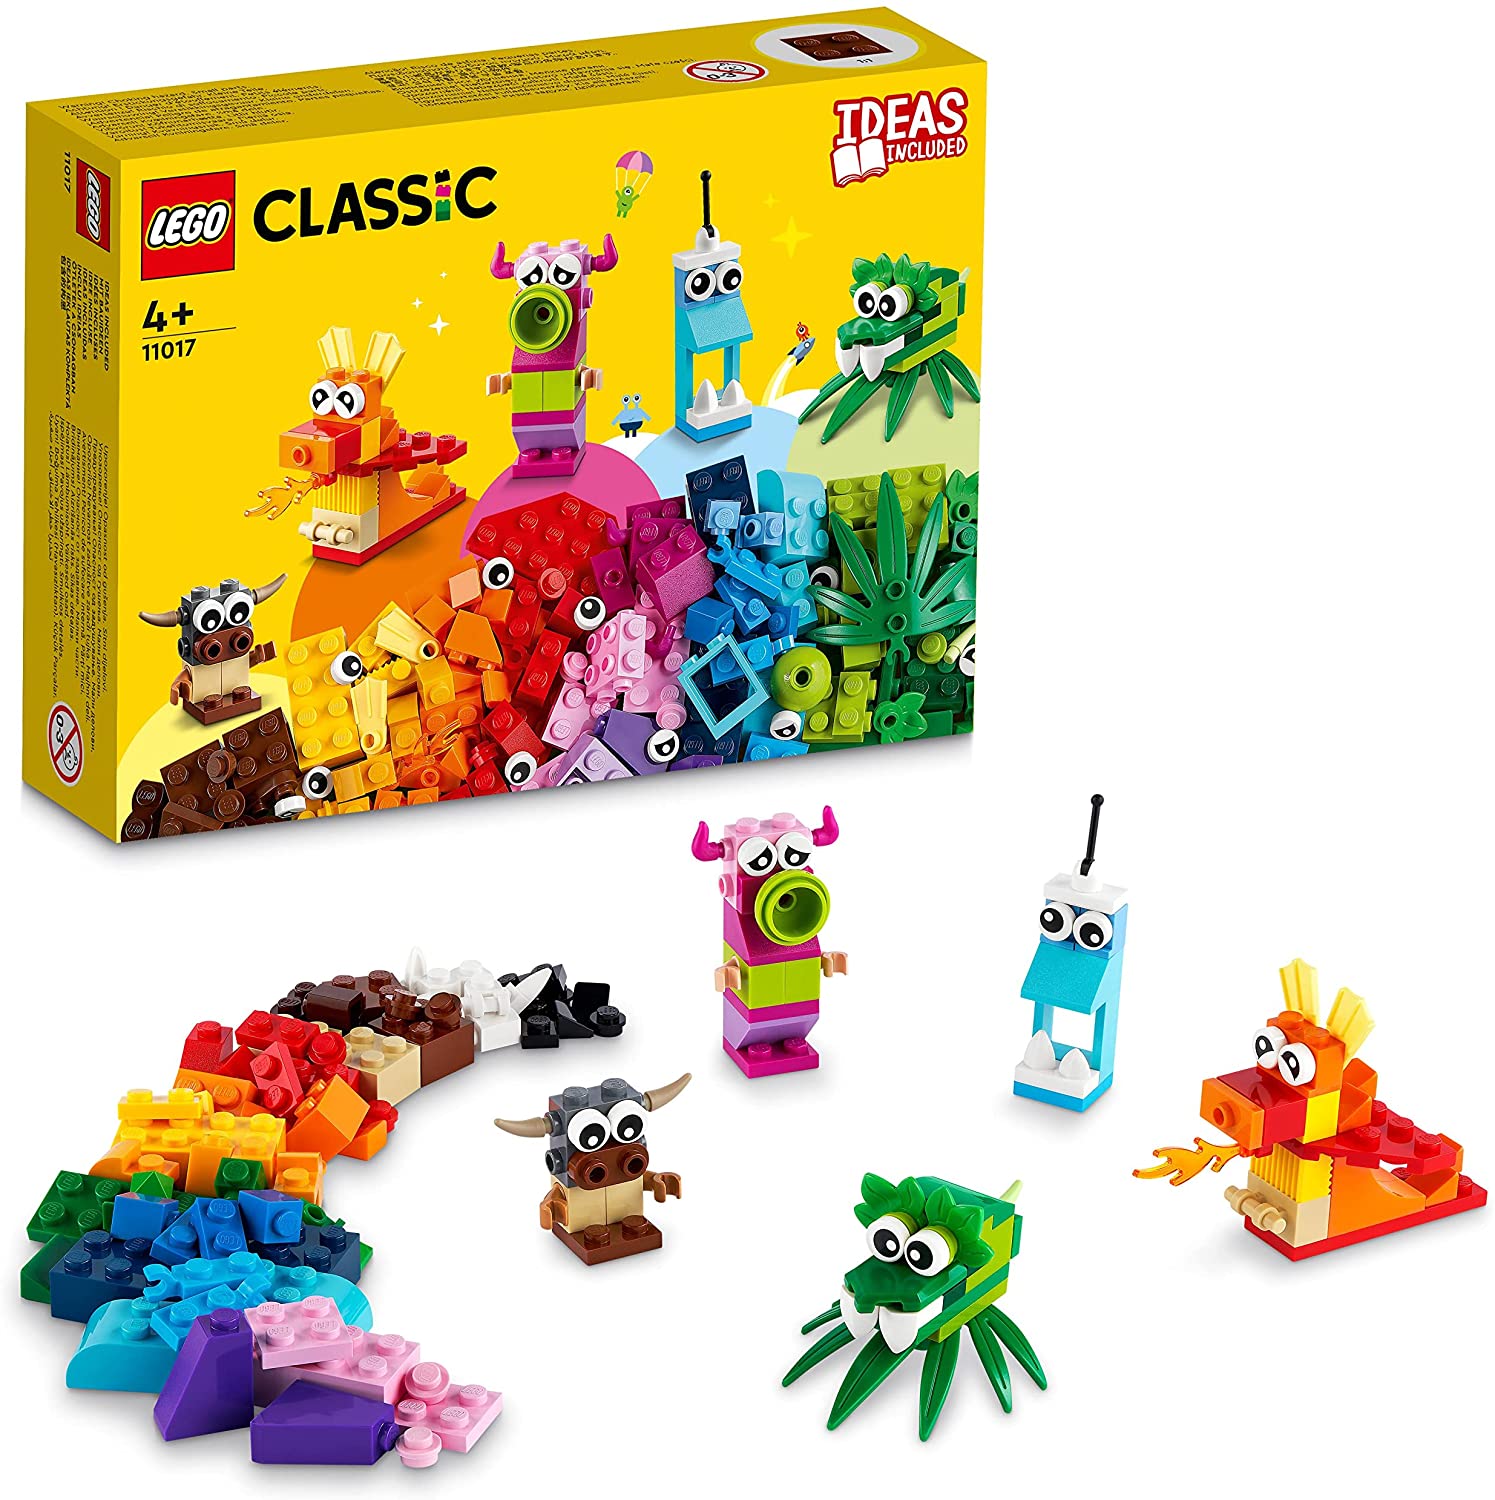 LEGO 11017 Classic Creative Monster Creative Set with LEGO Bricks, Box with